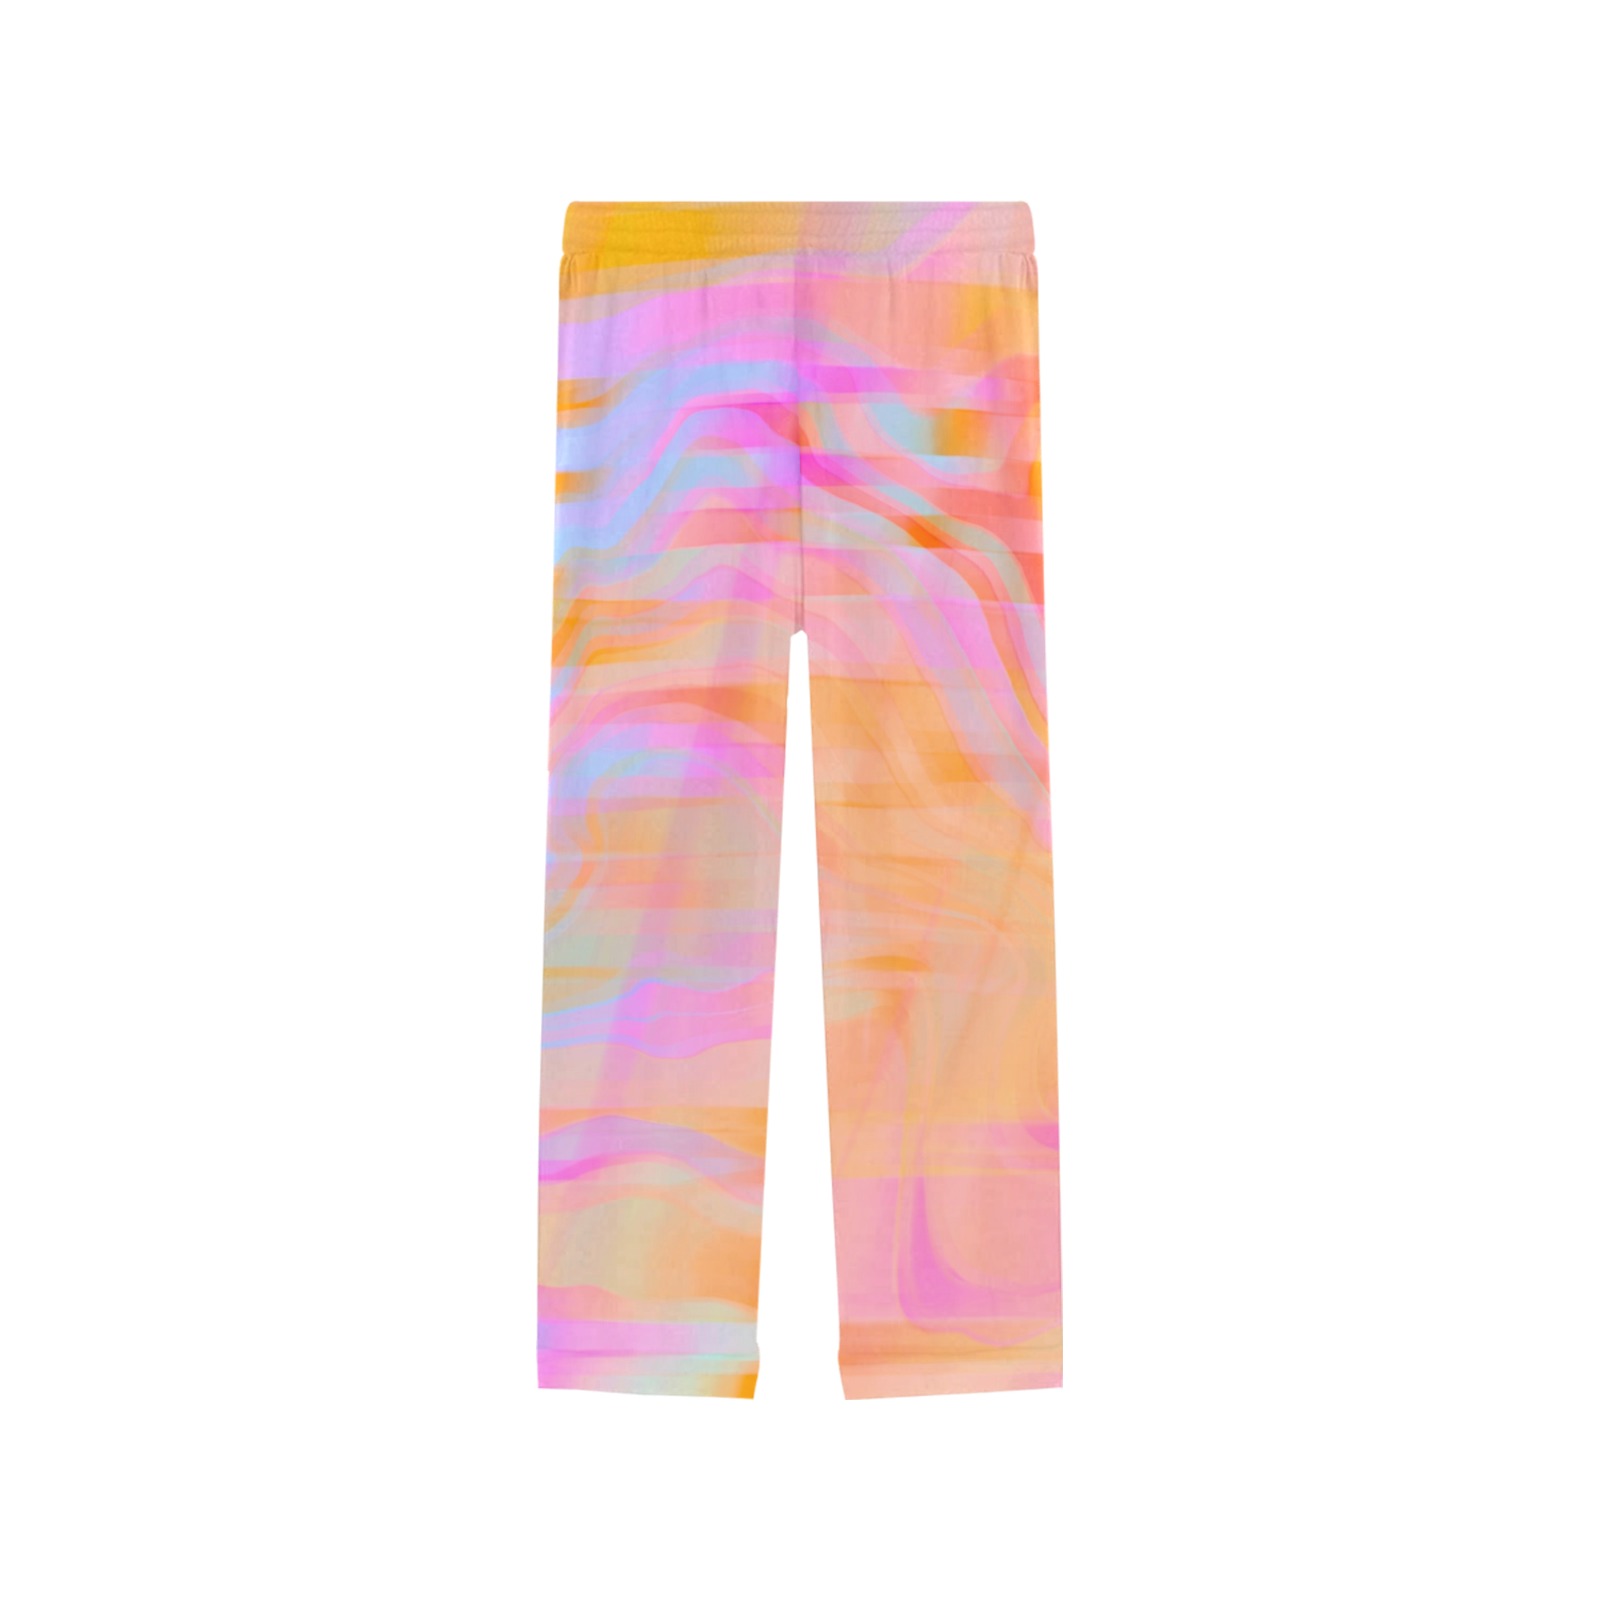 Sunset Glitch Effects 02 Women's Pajama Trousers